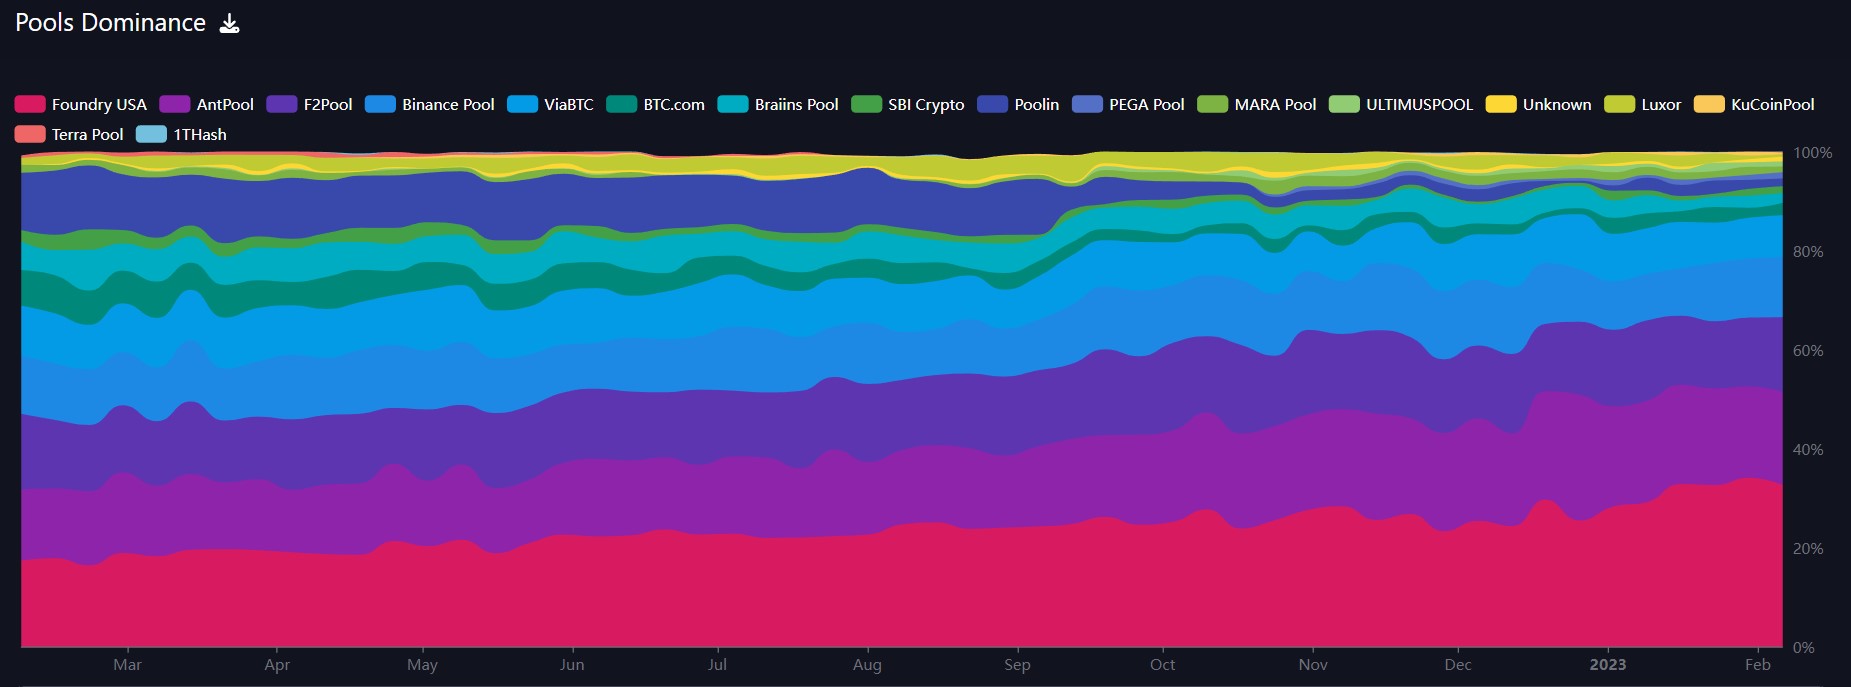 BTC pools dominance graph. 